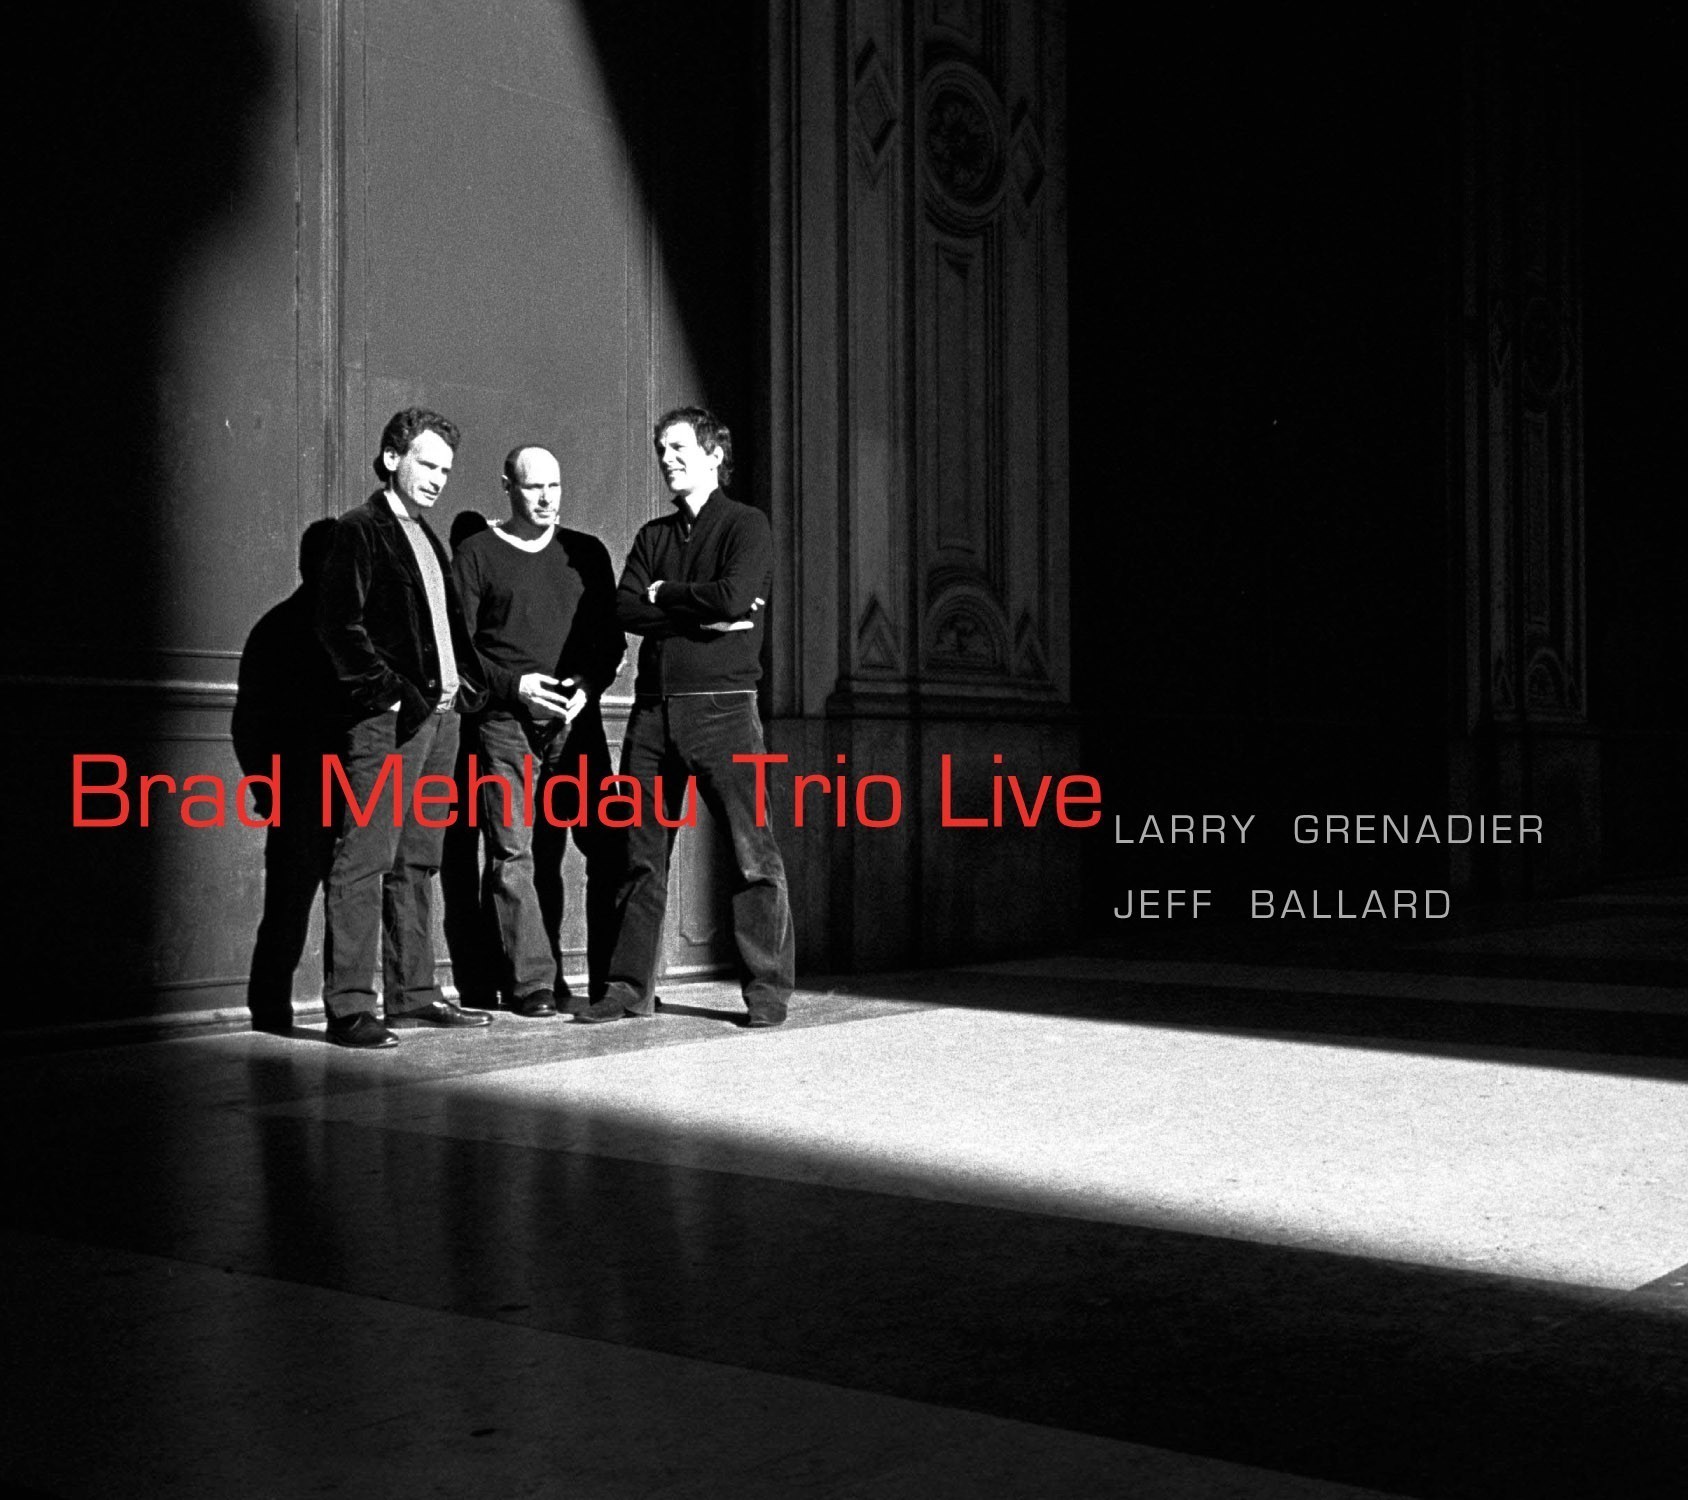 Brad Mehldau Trio Live is out now.